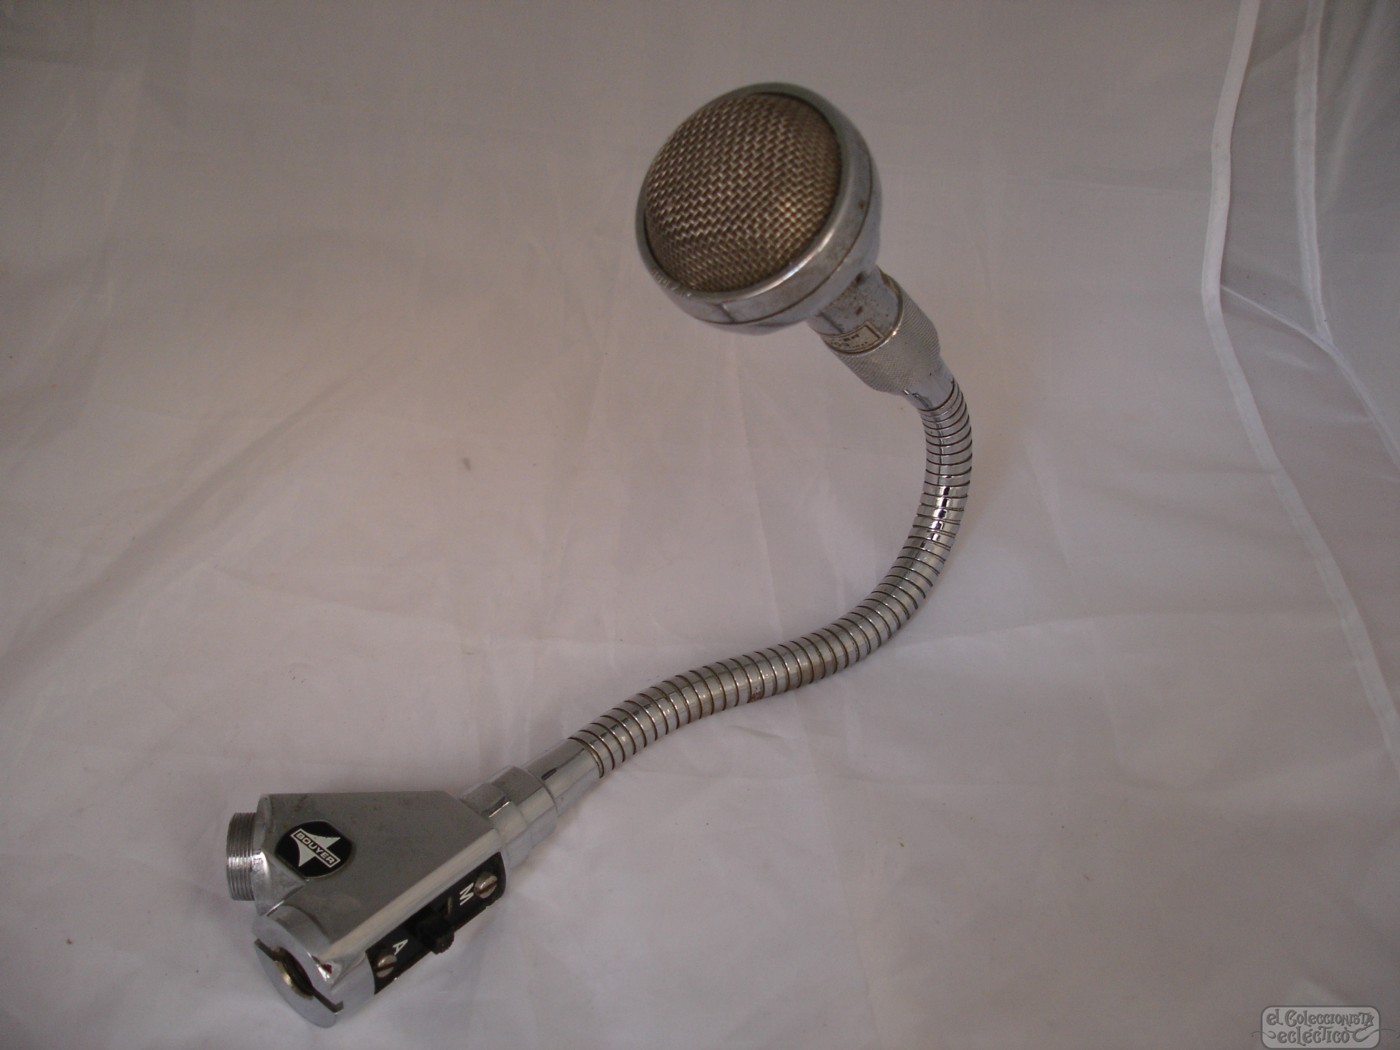 Microphone radio années 1930 - 1950 Bouyer vintage collection musique